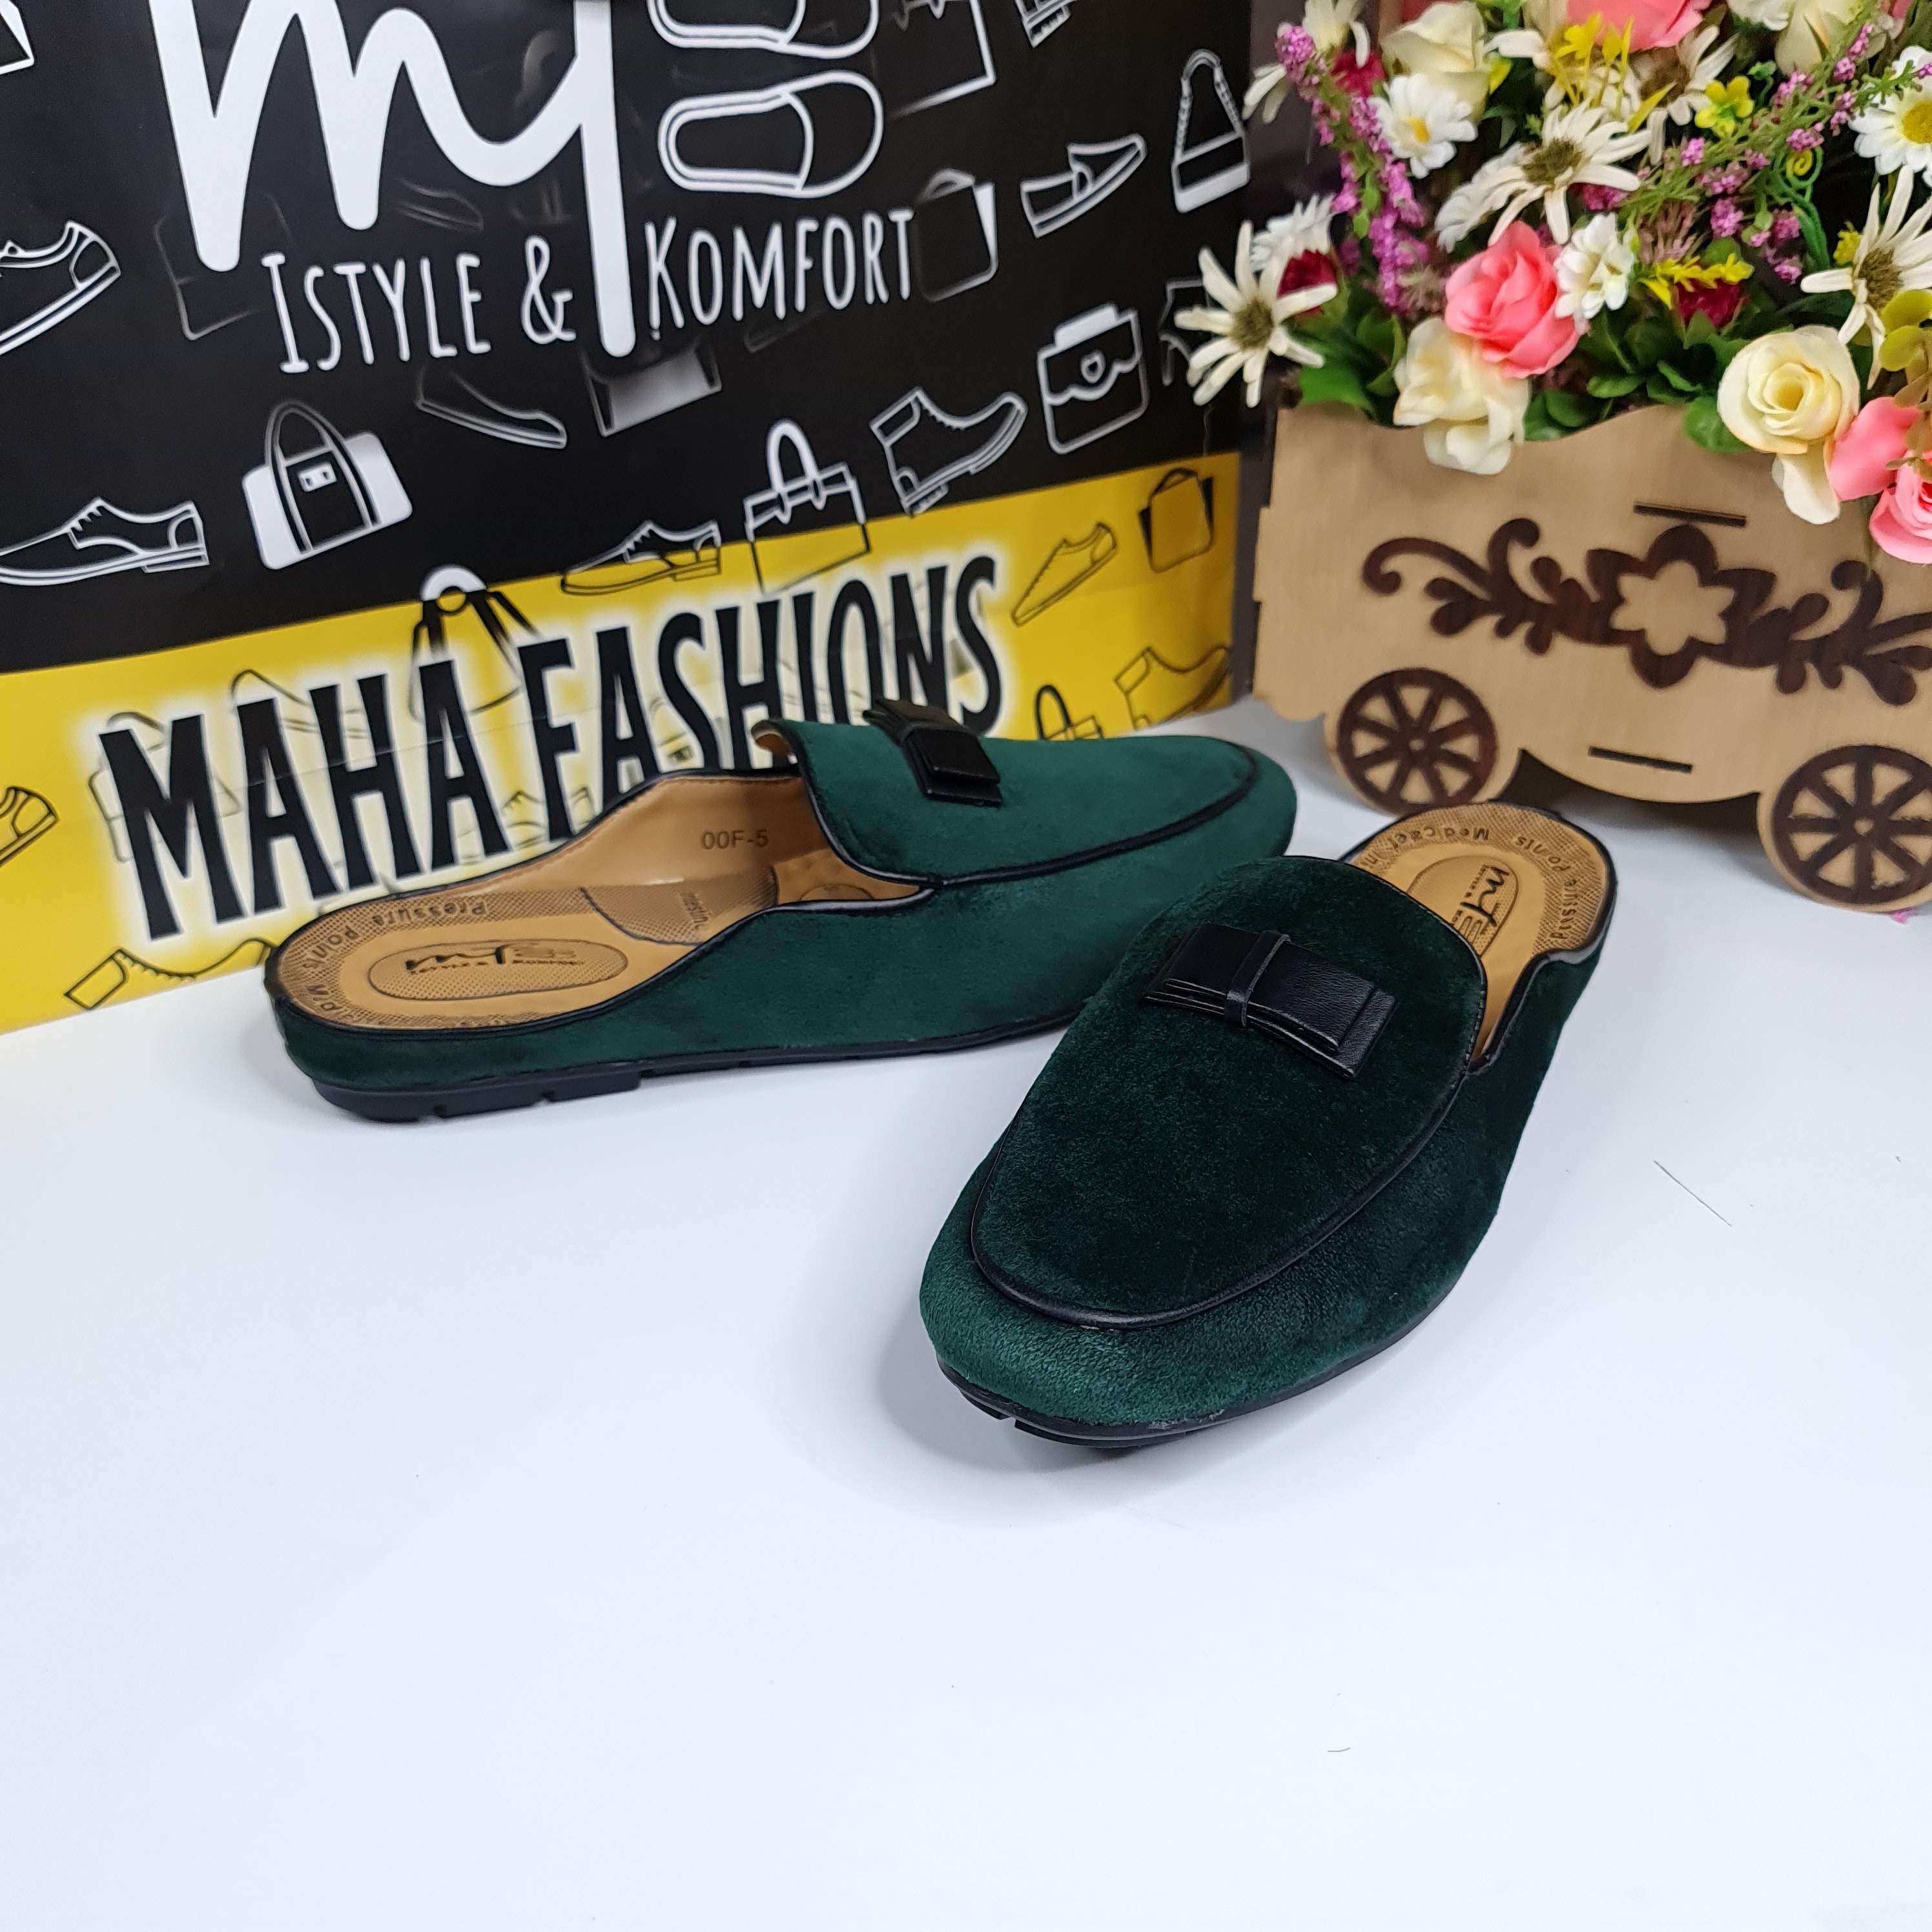 AMM-038 - Maha fashions -  